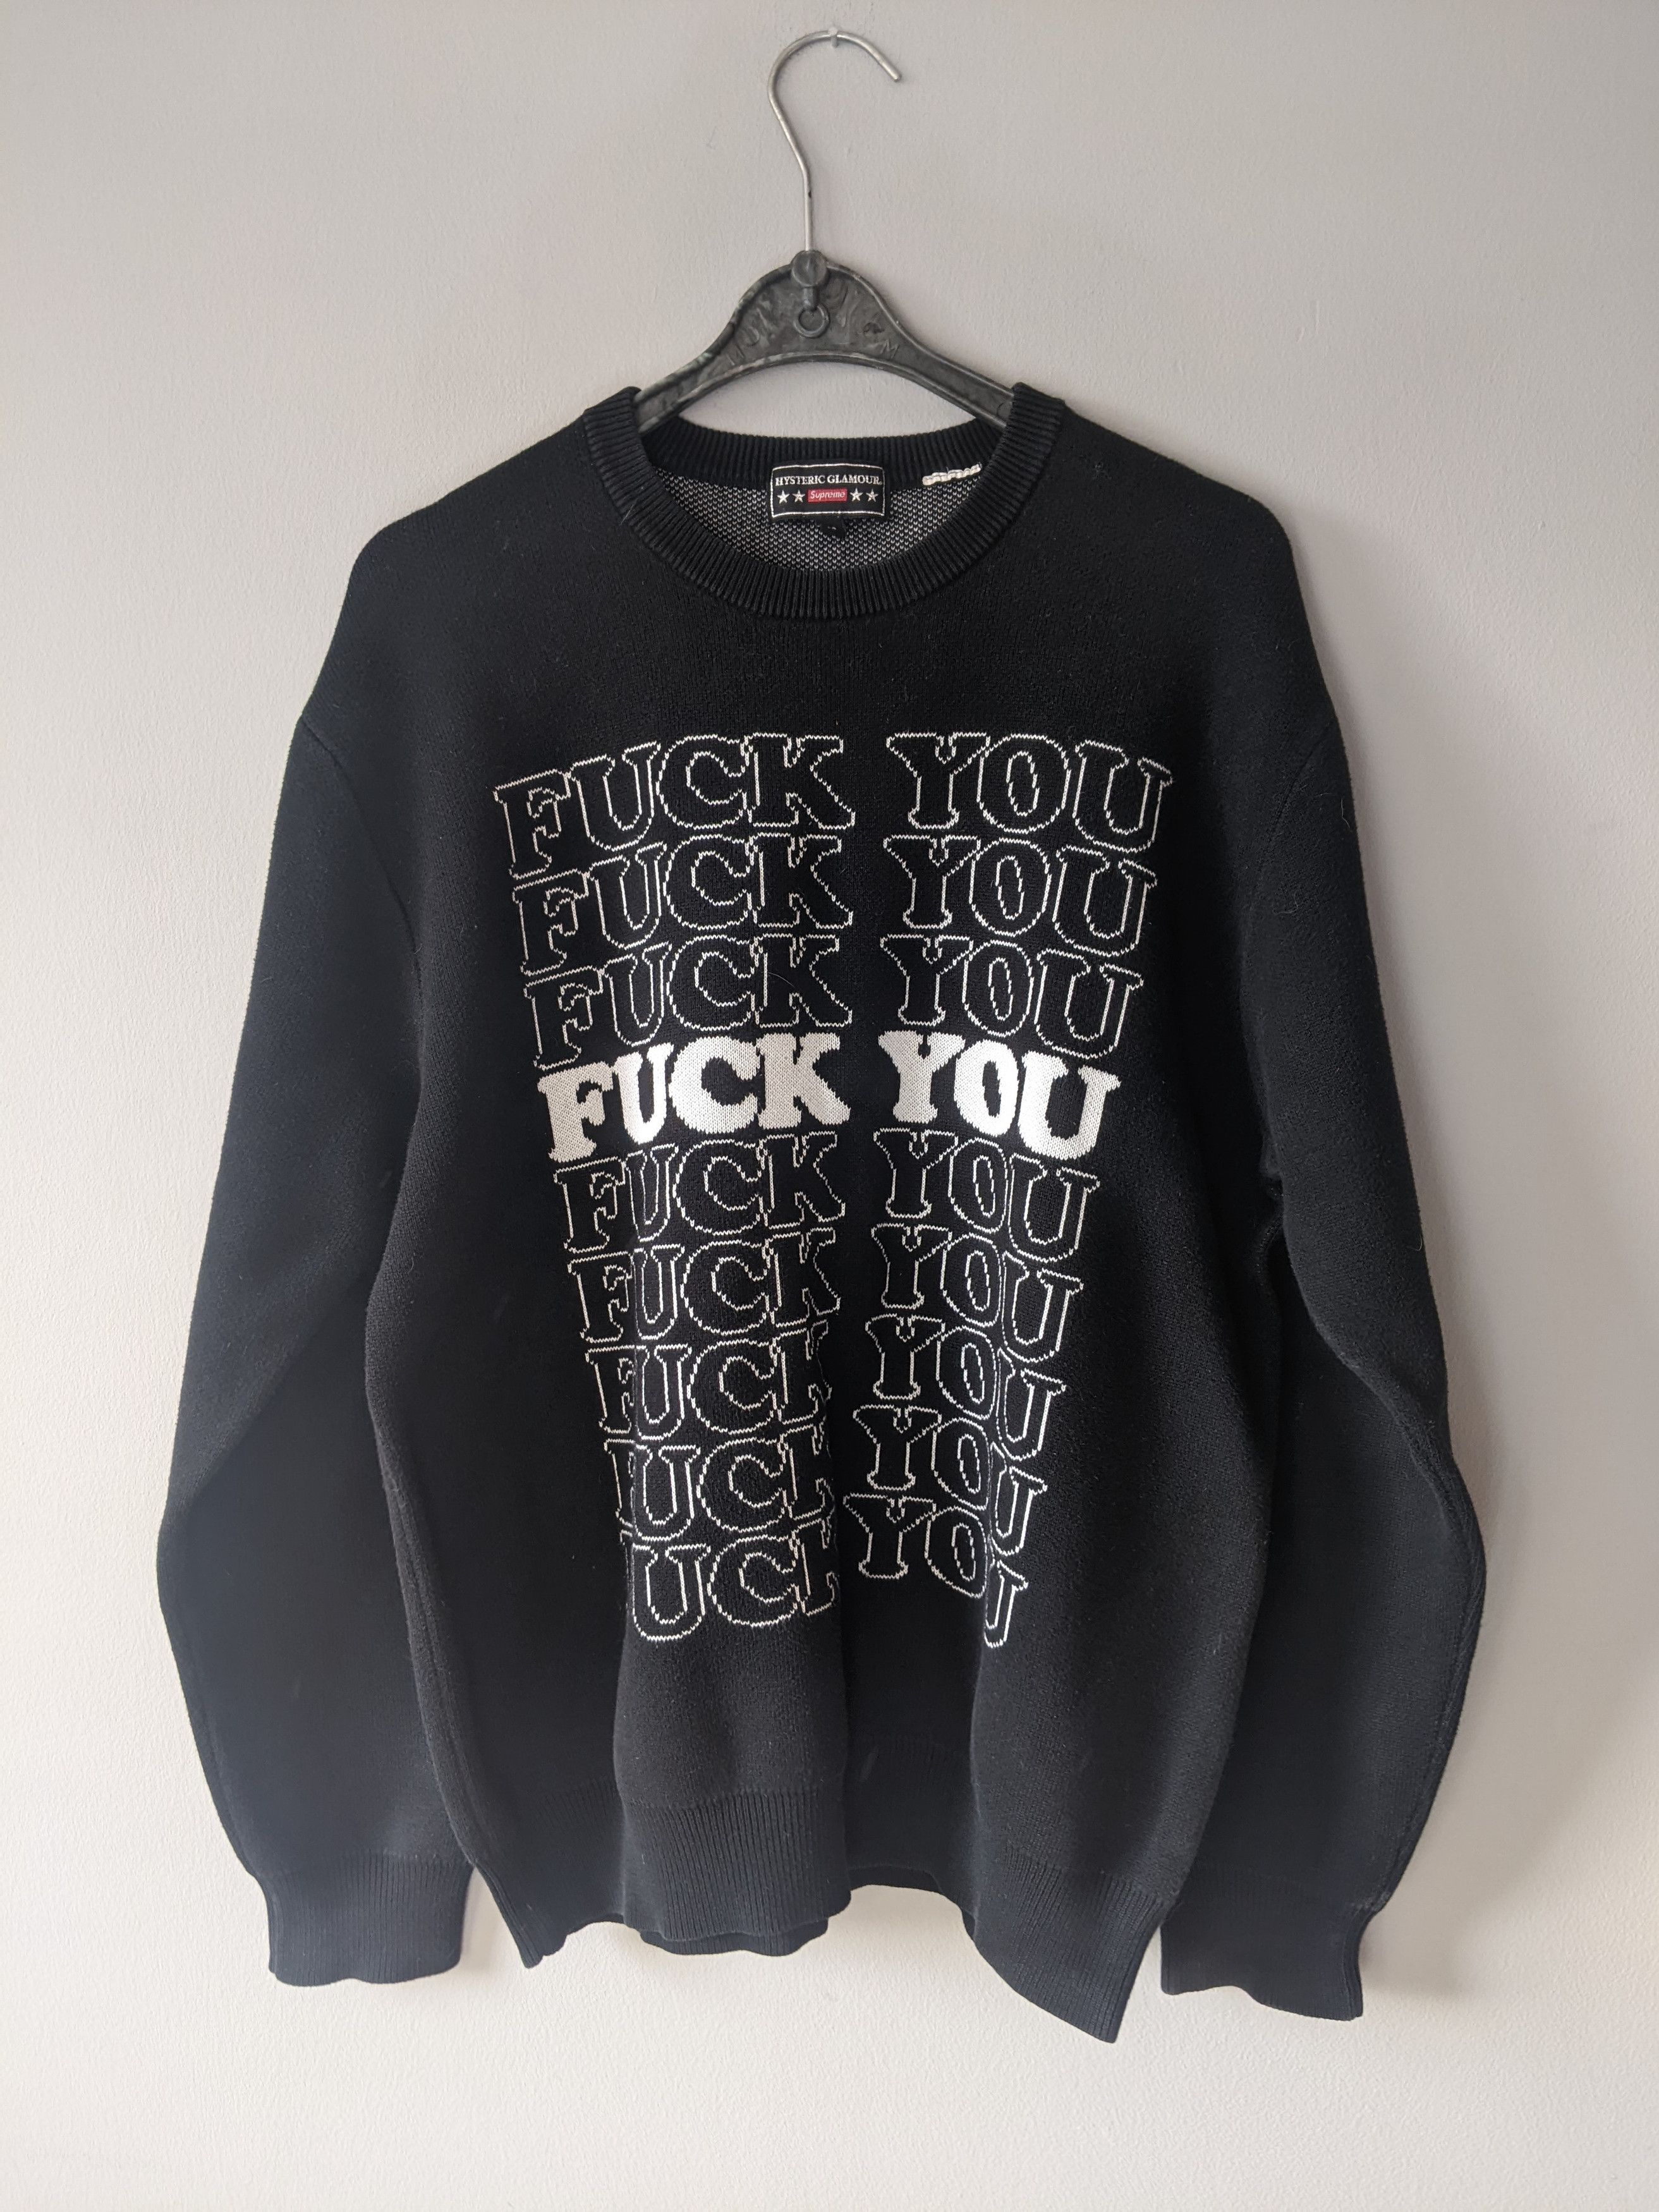 Supreme Supreme x hysteric glamour fuck you sweater | Grailed